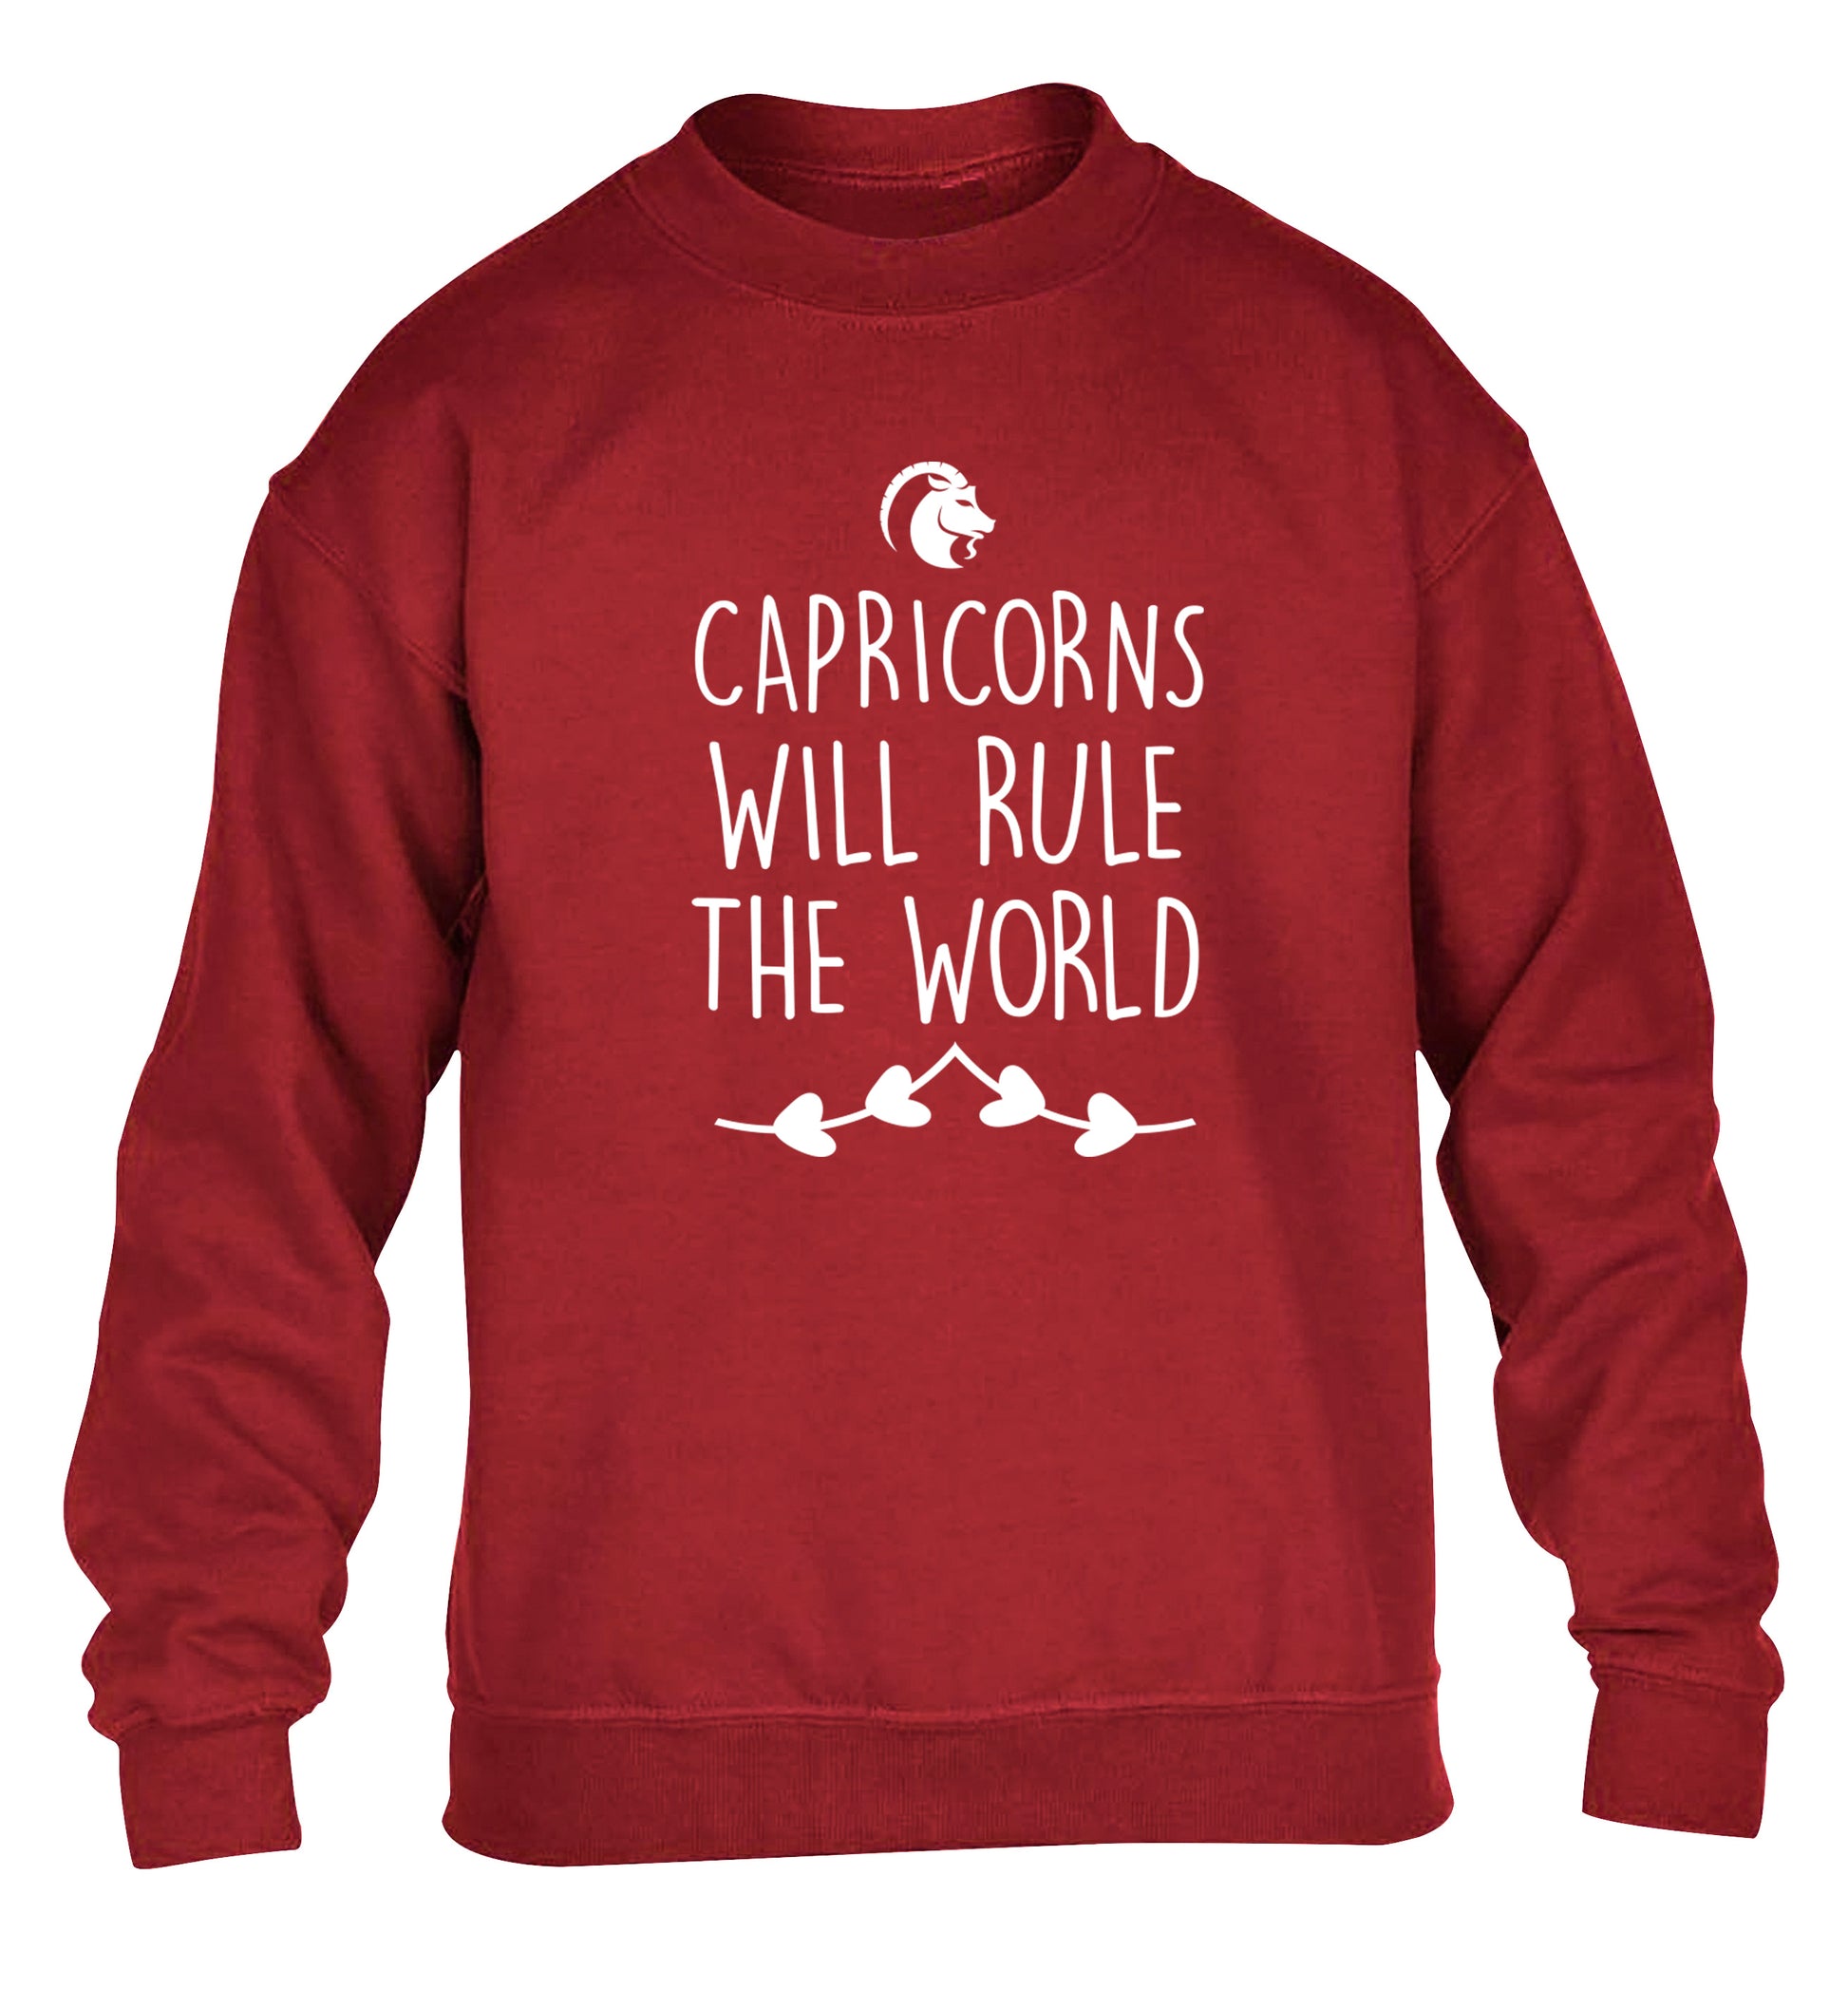 Capricorns will rule the world children's grey sweater 12-13 Years